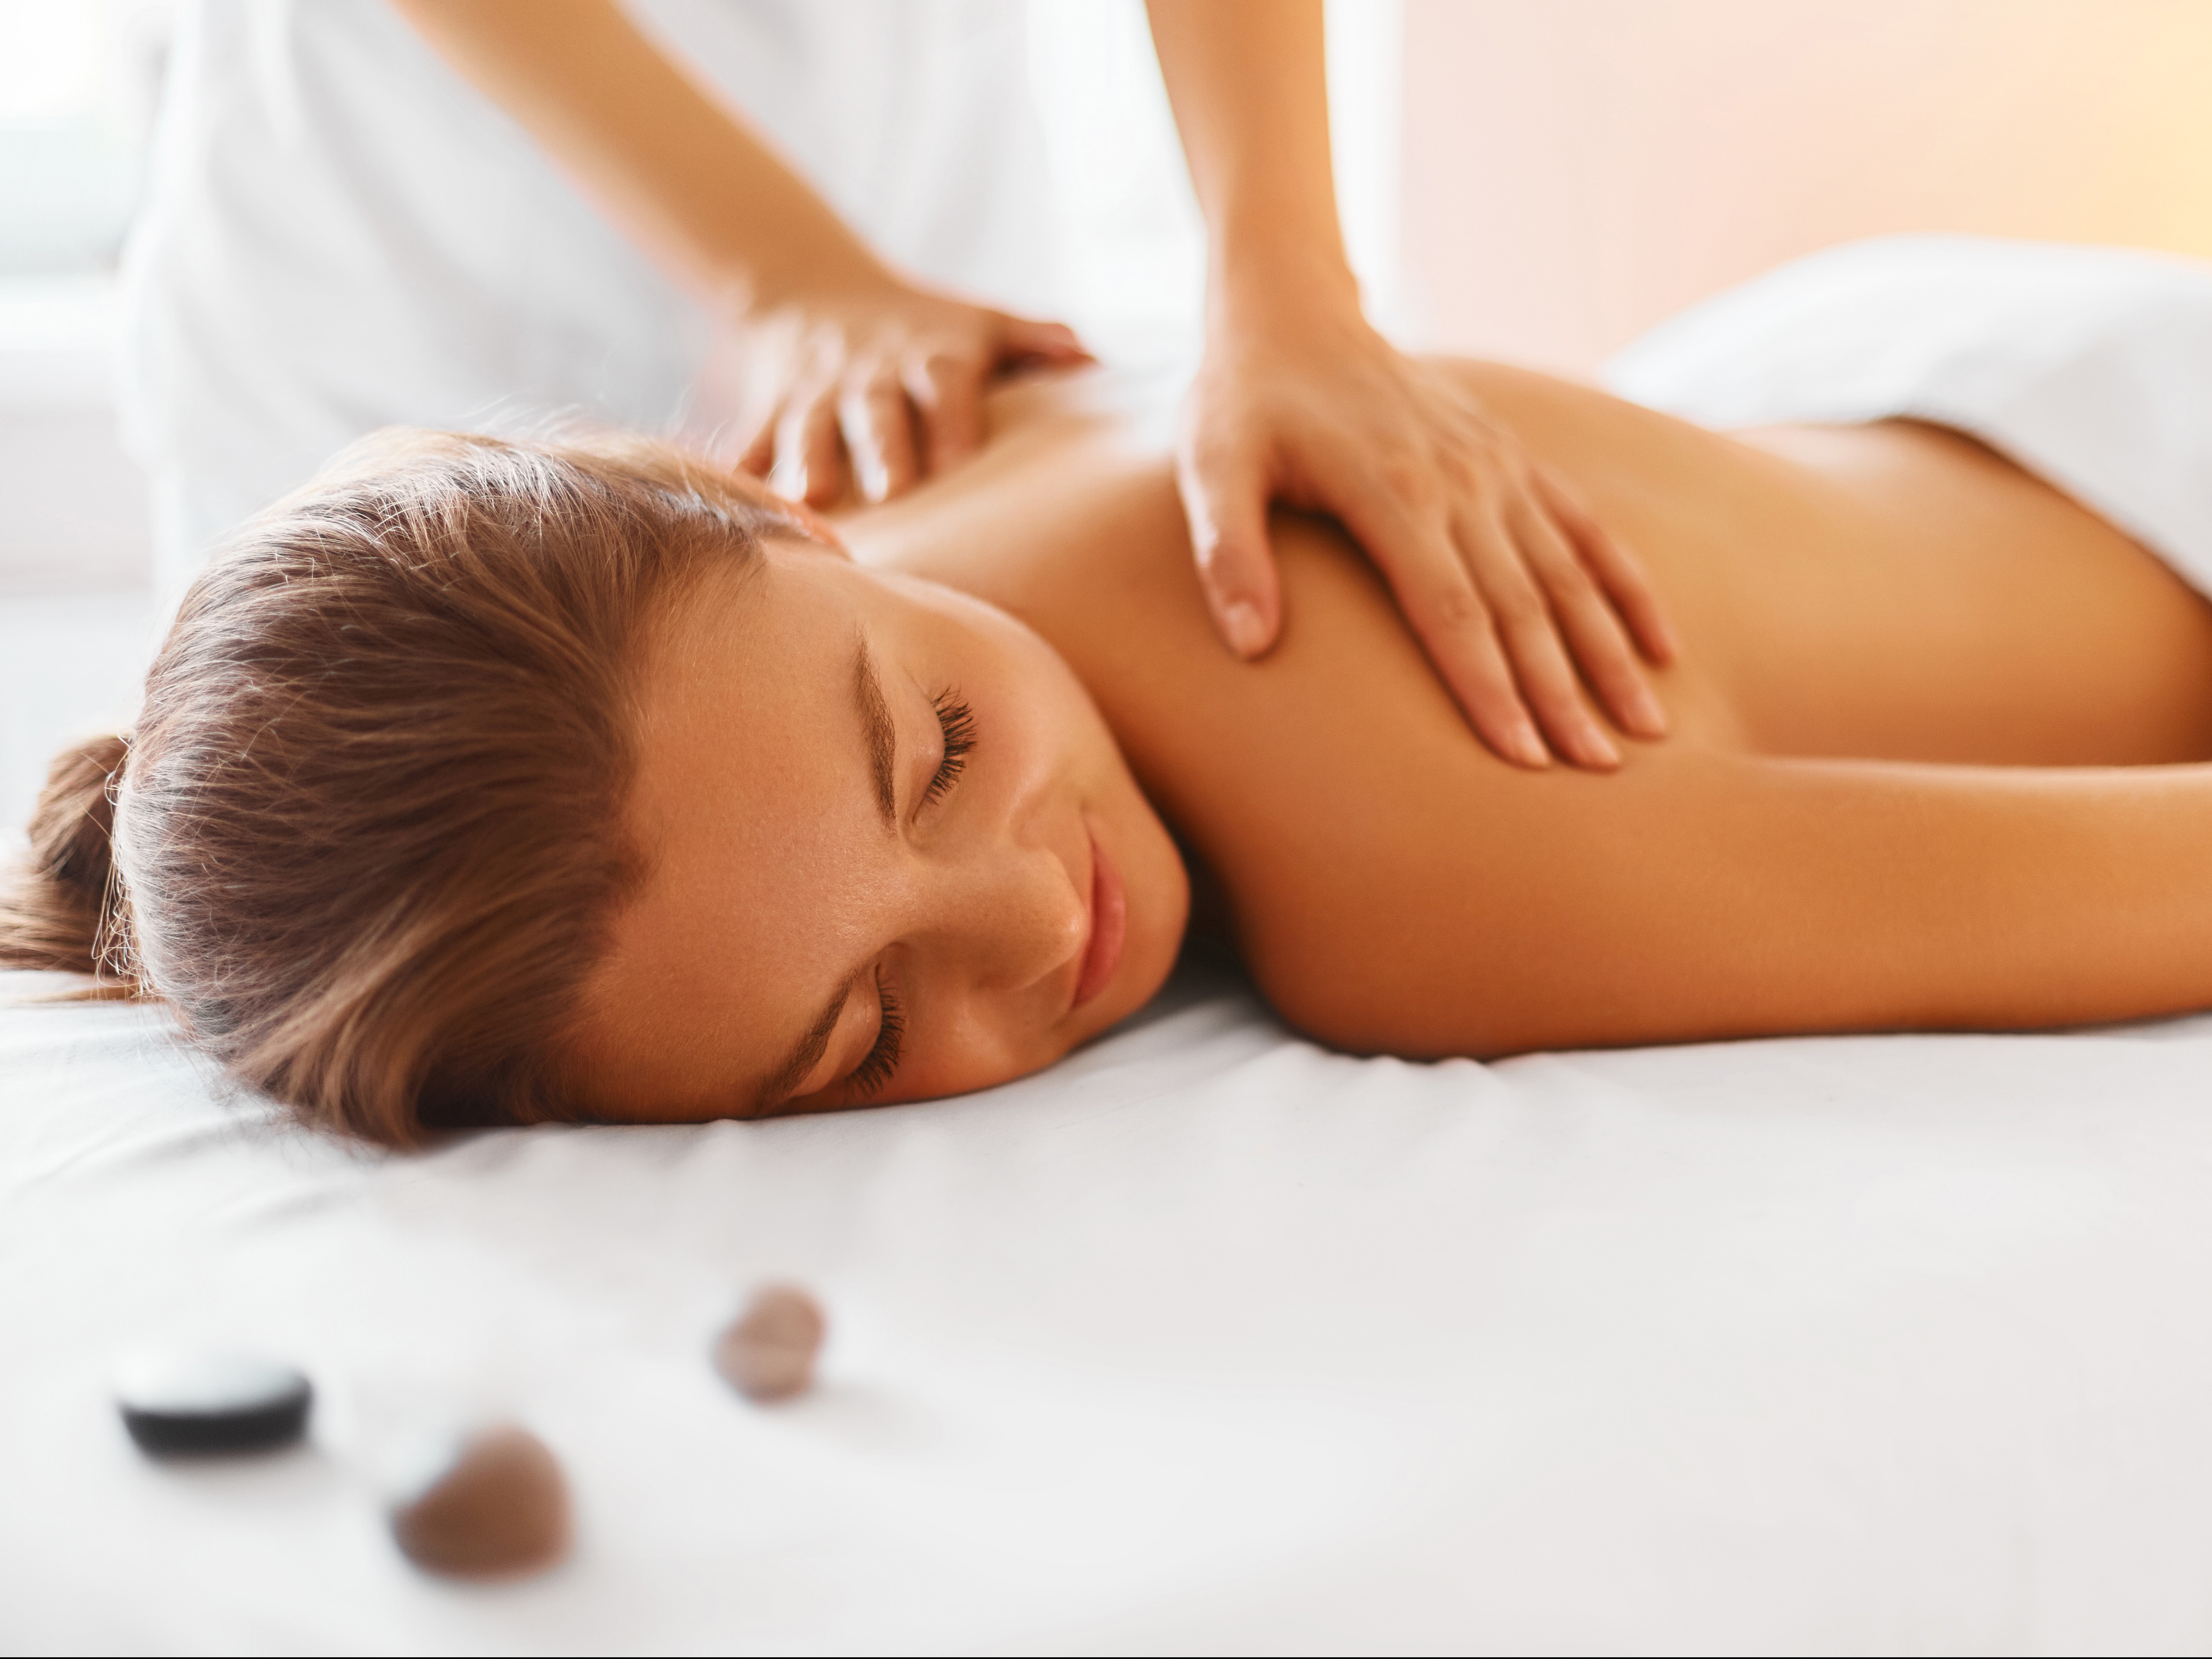 7 surprising facts about Swedish massage